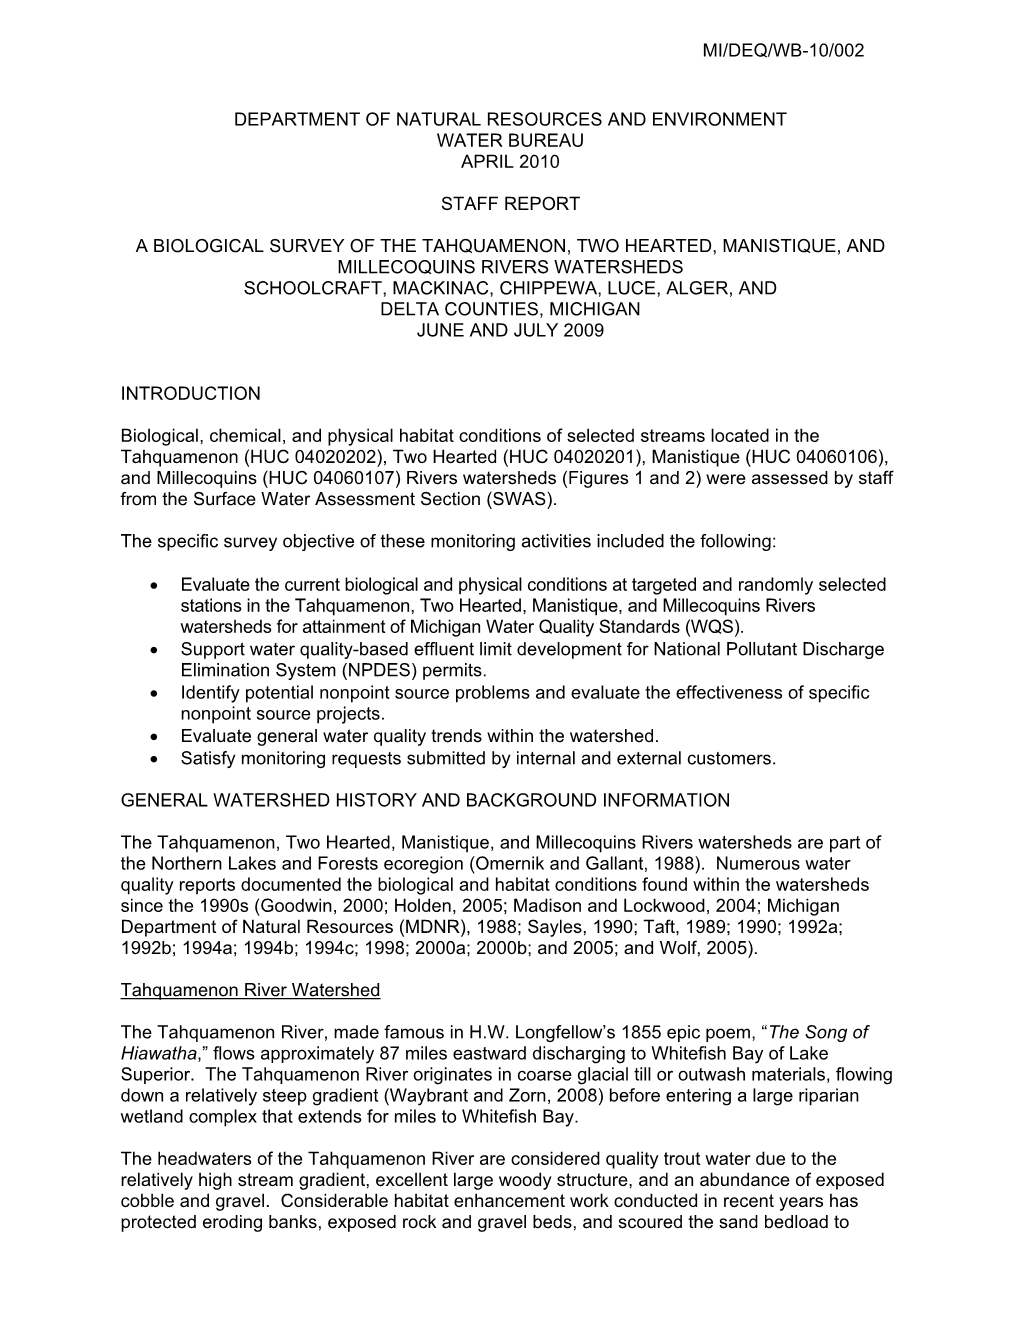 2009 Eastern Central U.P. Michigan Watersheds Biosurvey Monitoring Report